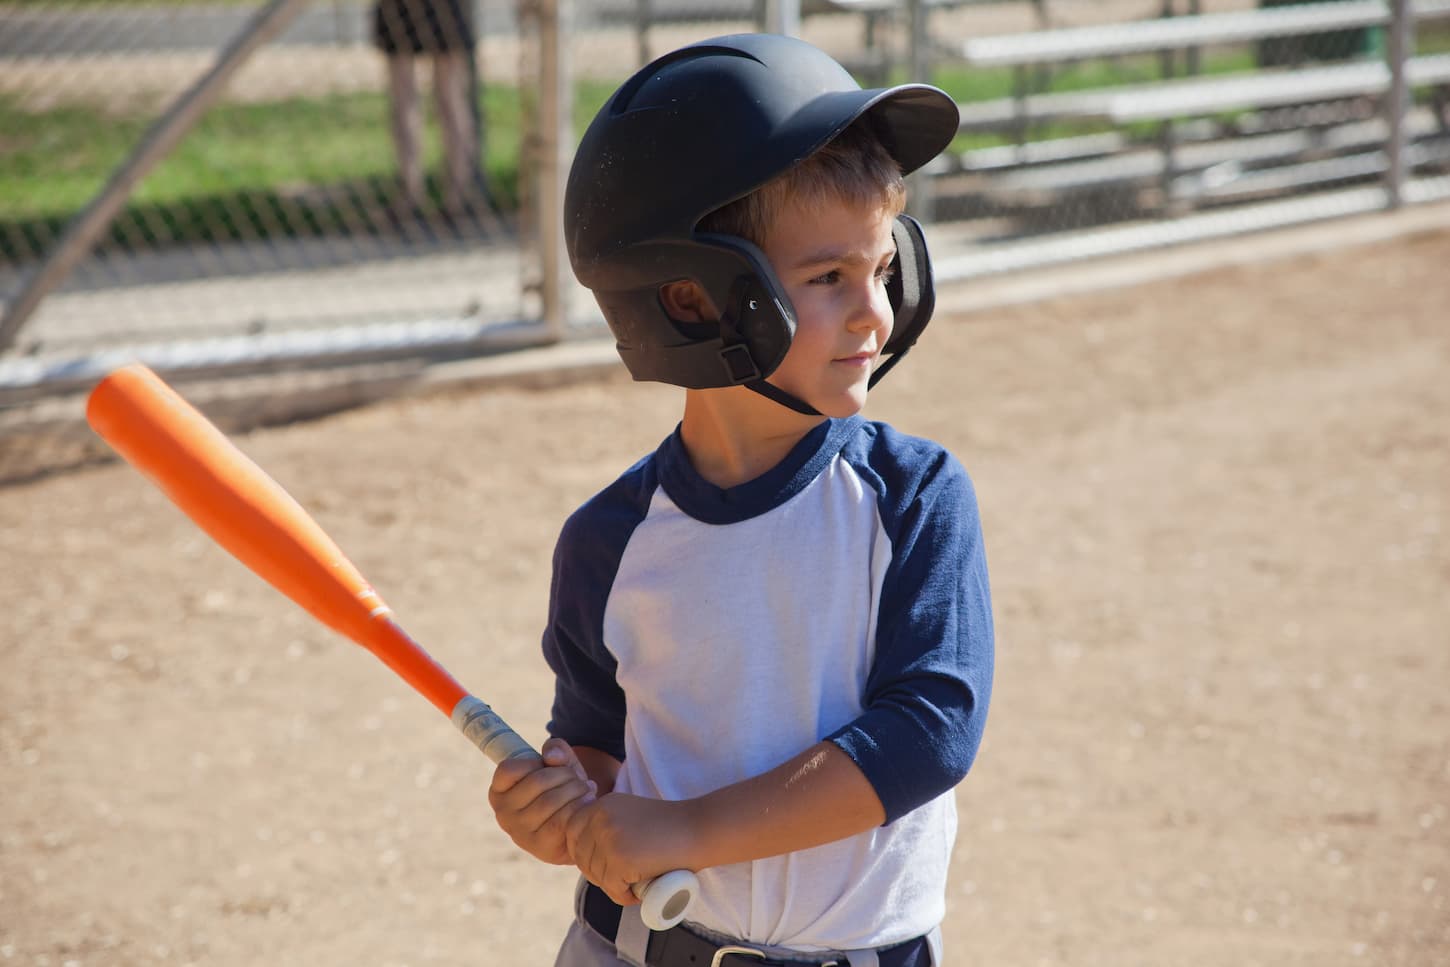 An image of a Little boy playing baseball.